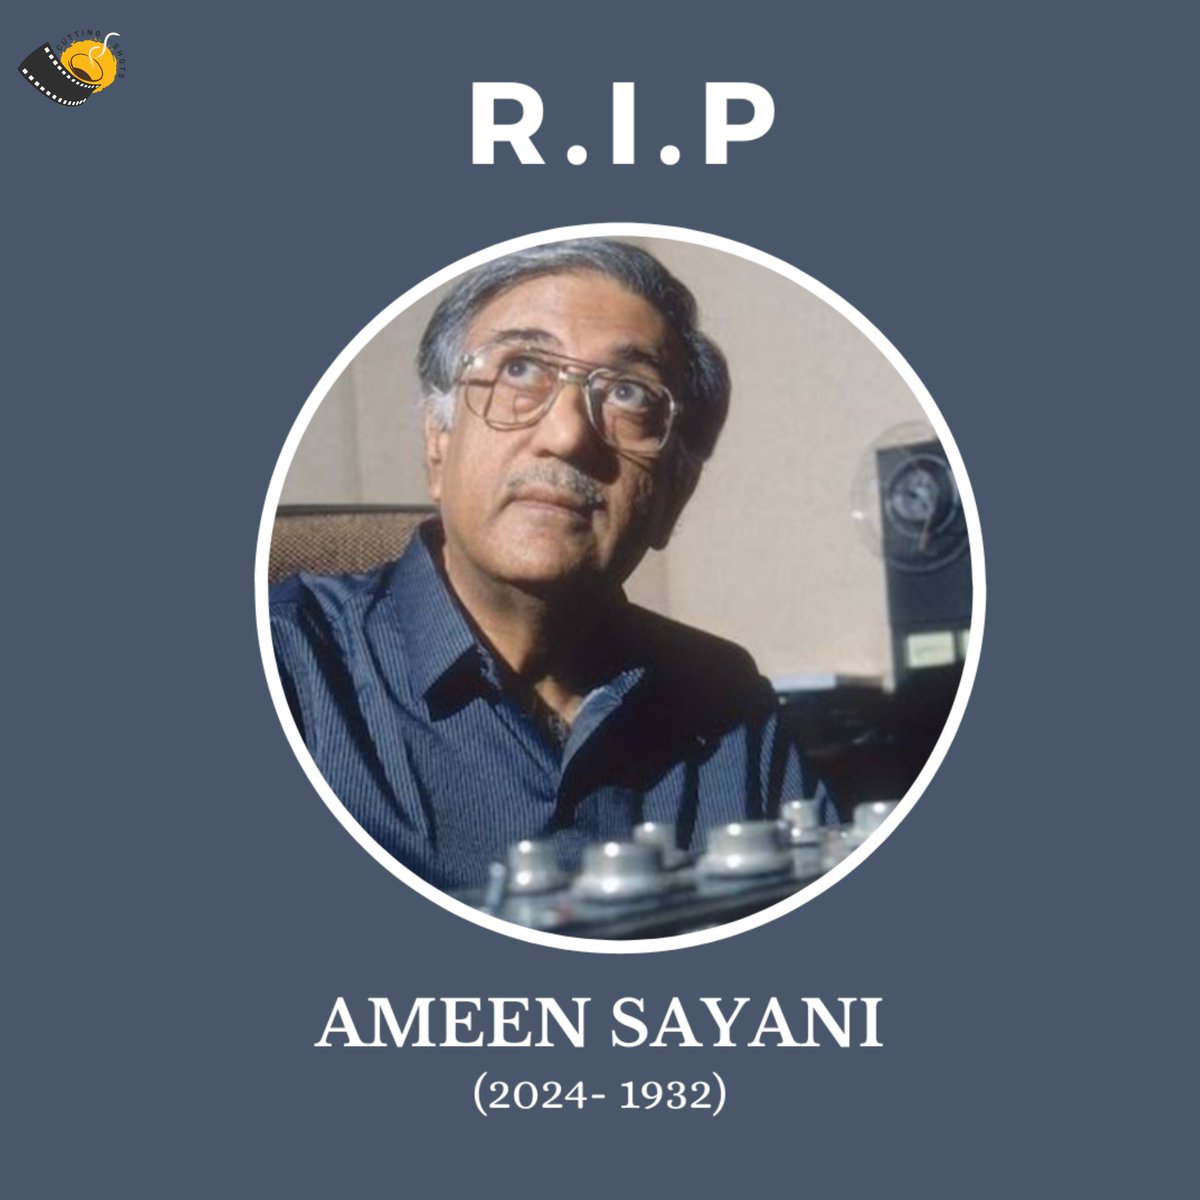 Behno aur bhaiyyo, here's some sad news coming in. Iconic radio presenter Ameen Sayani passes away at 91. 

#ameensayani #ripameensayani #geetmala #binacageetmala #radio #cuttingshots